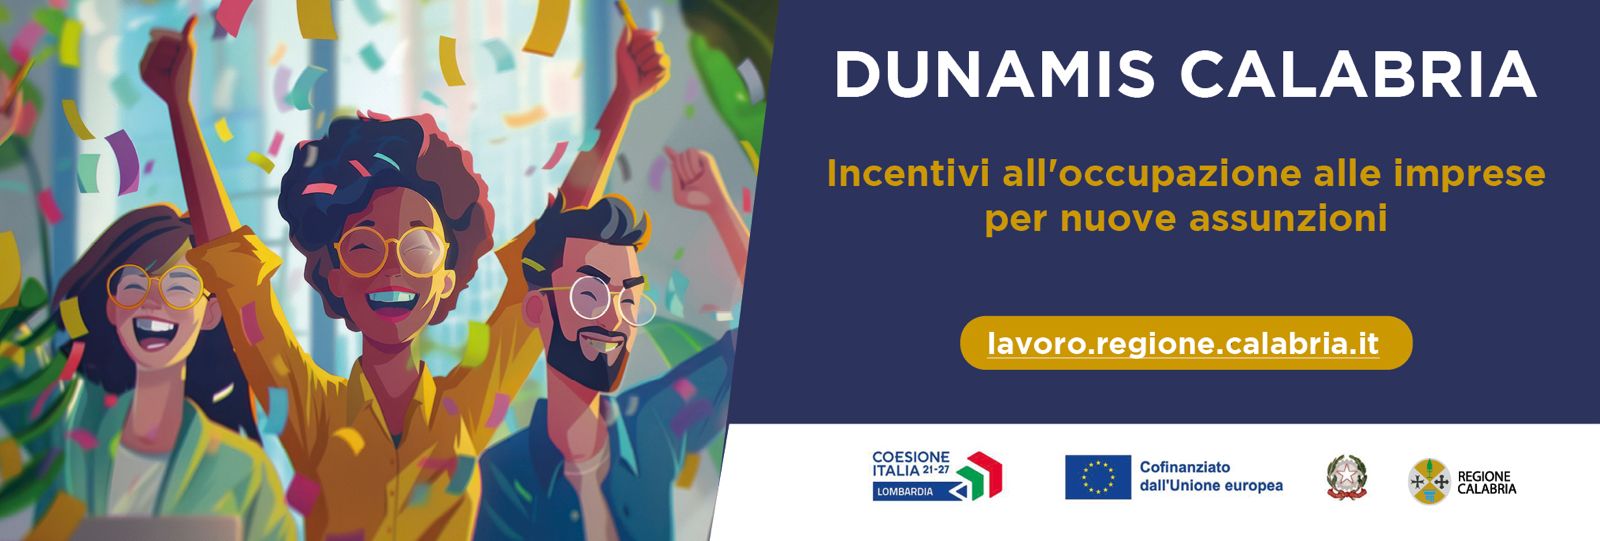 Dunamis Calabria - Incentivi all'occupazione alle imprese per nuove assunzioni